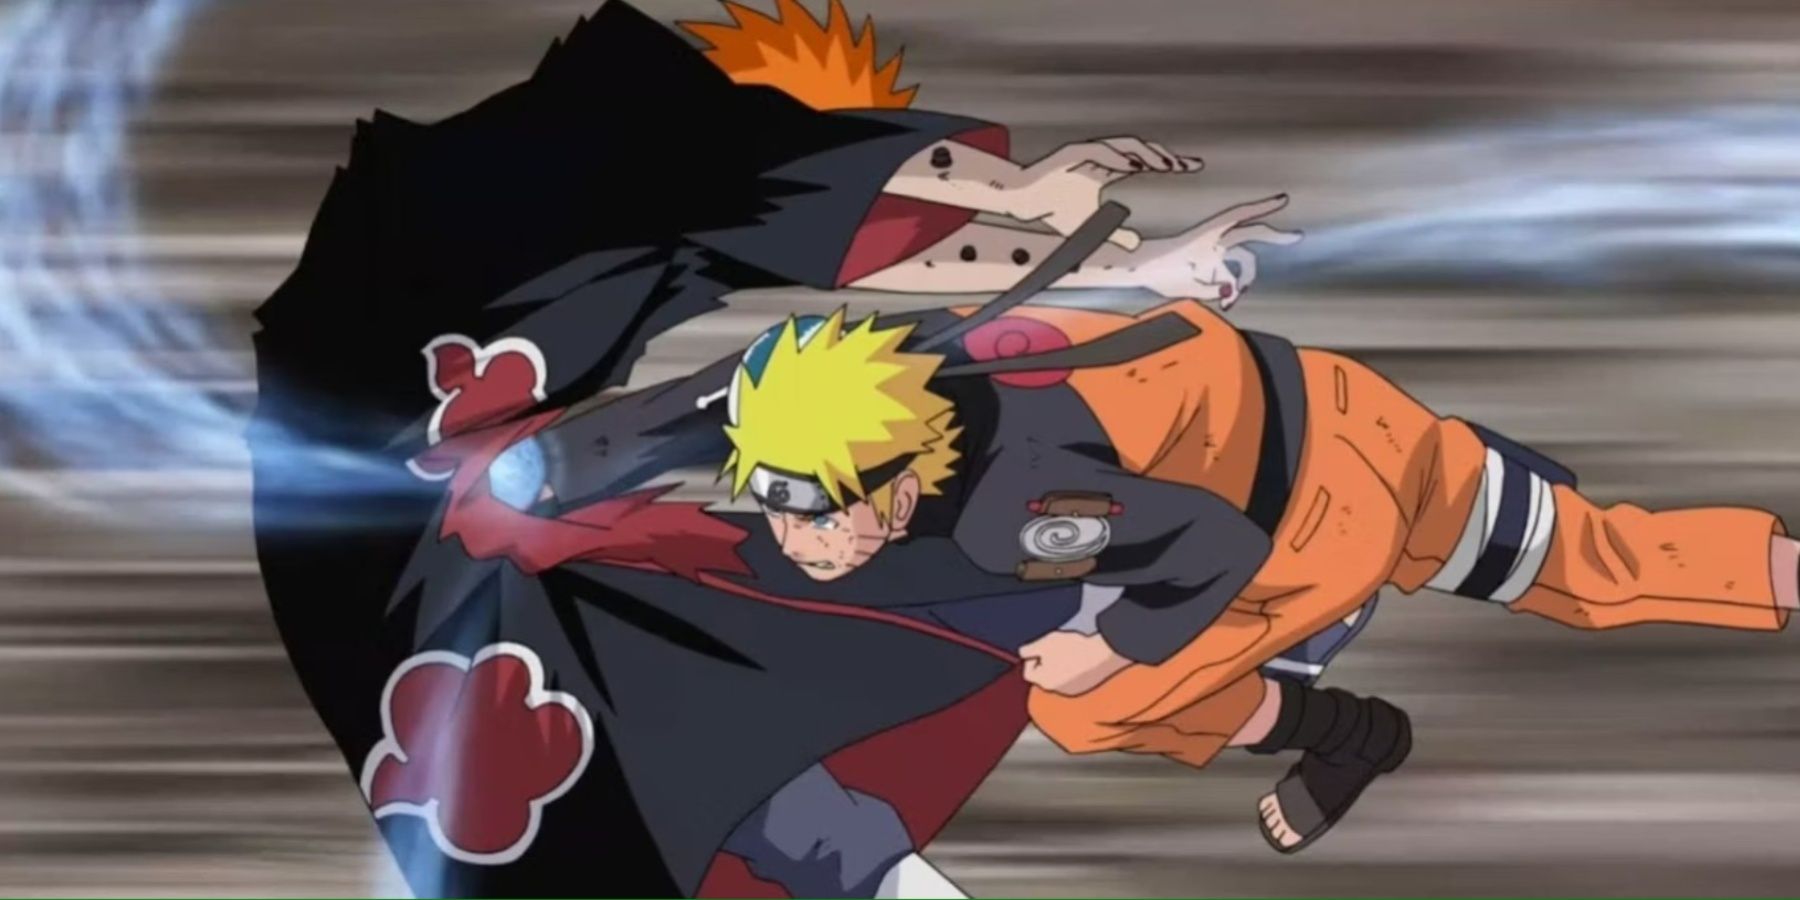 Naruto defeating Pain with the Rasengan